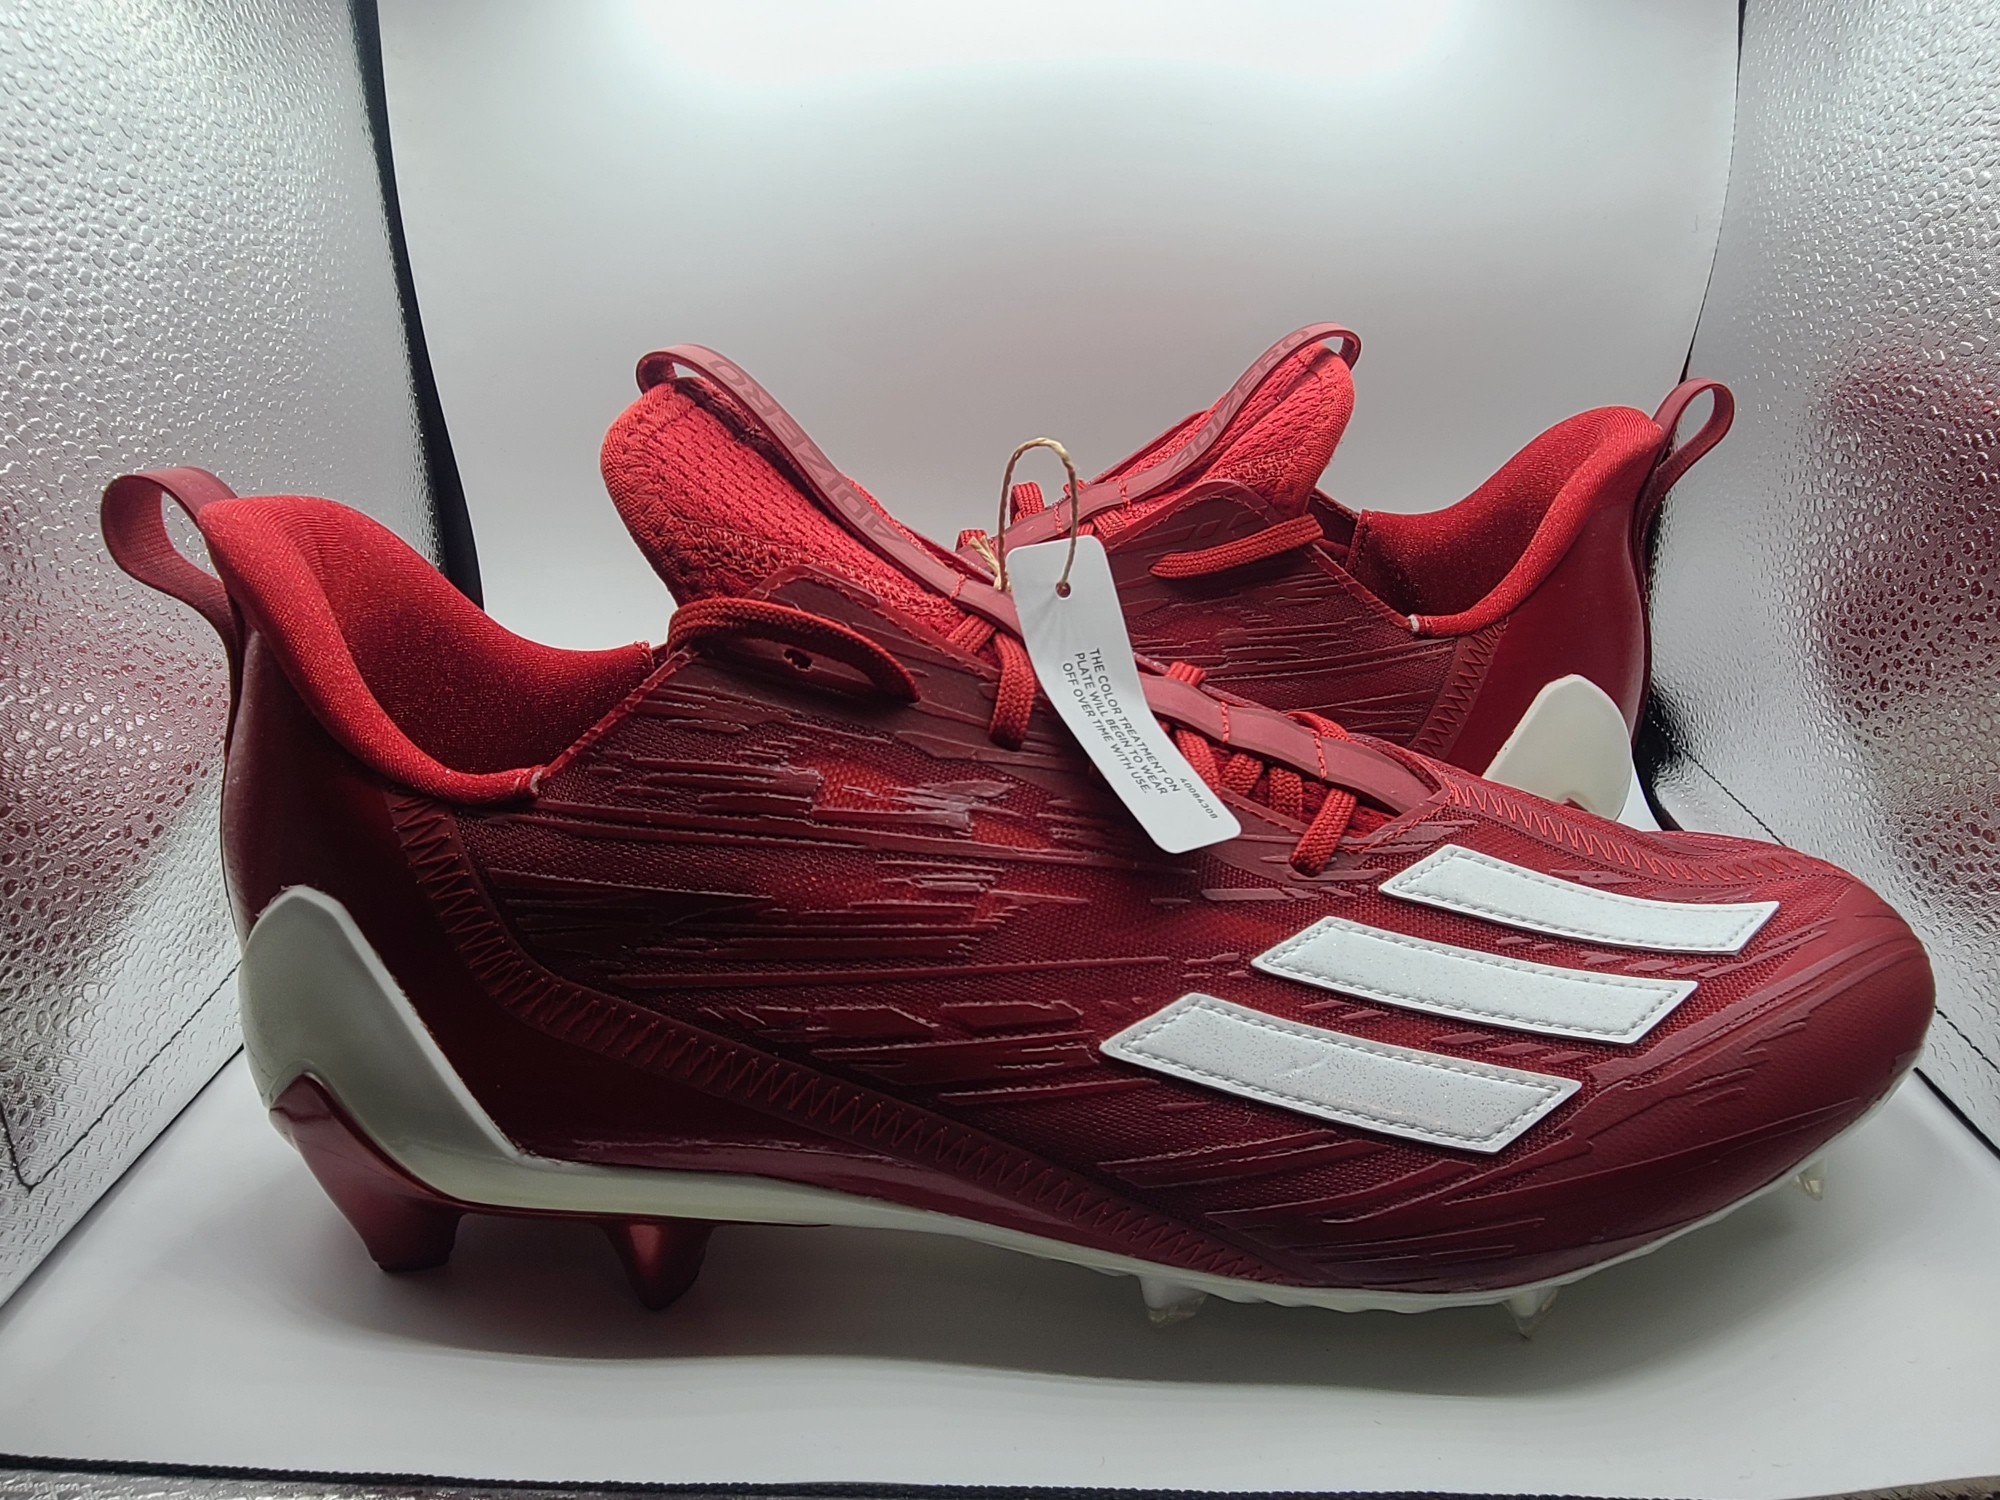 Adidas Adizero Football Cleats Team Power Red Men's Size 12.5